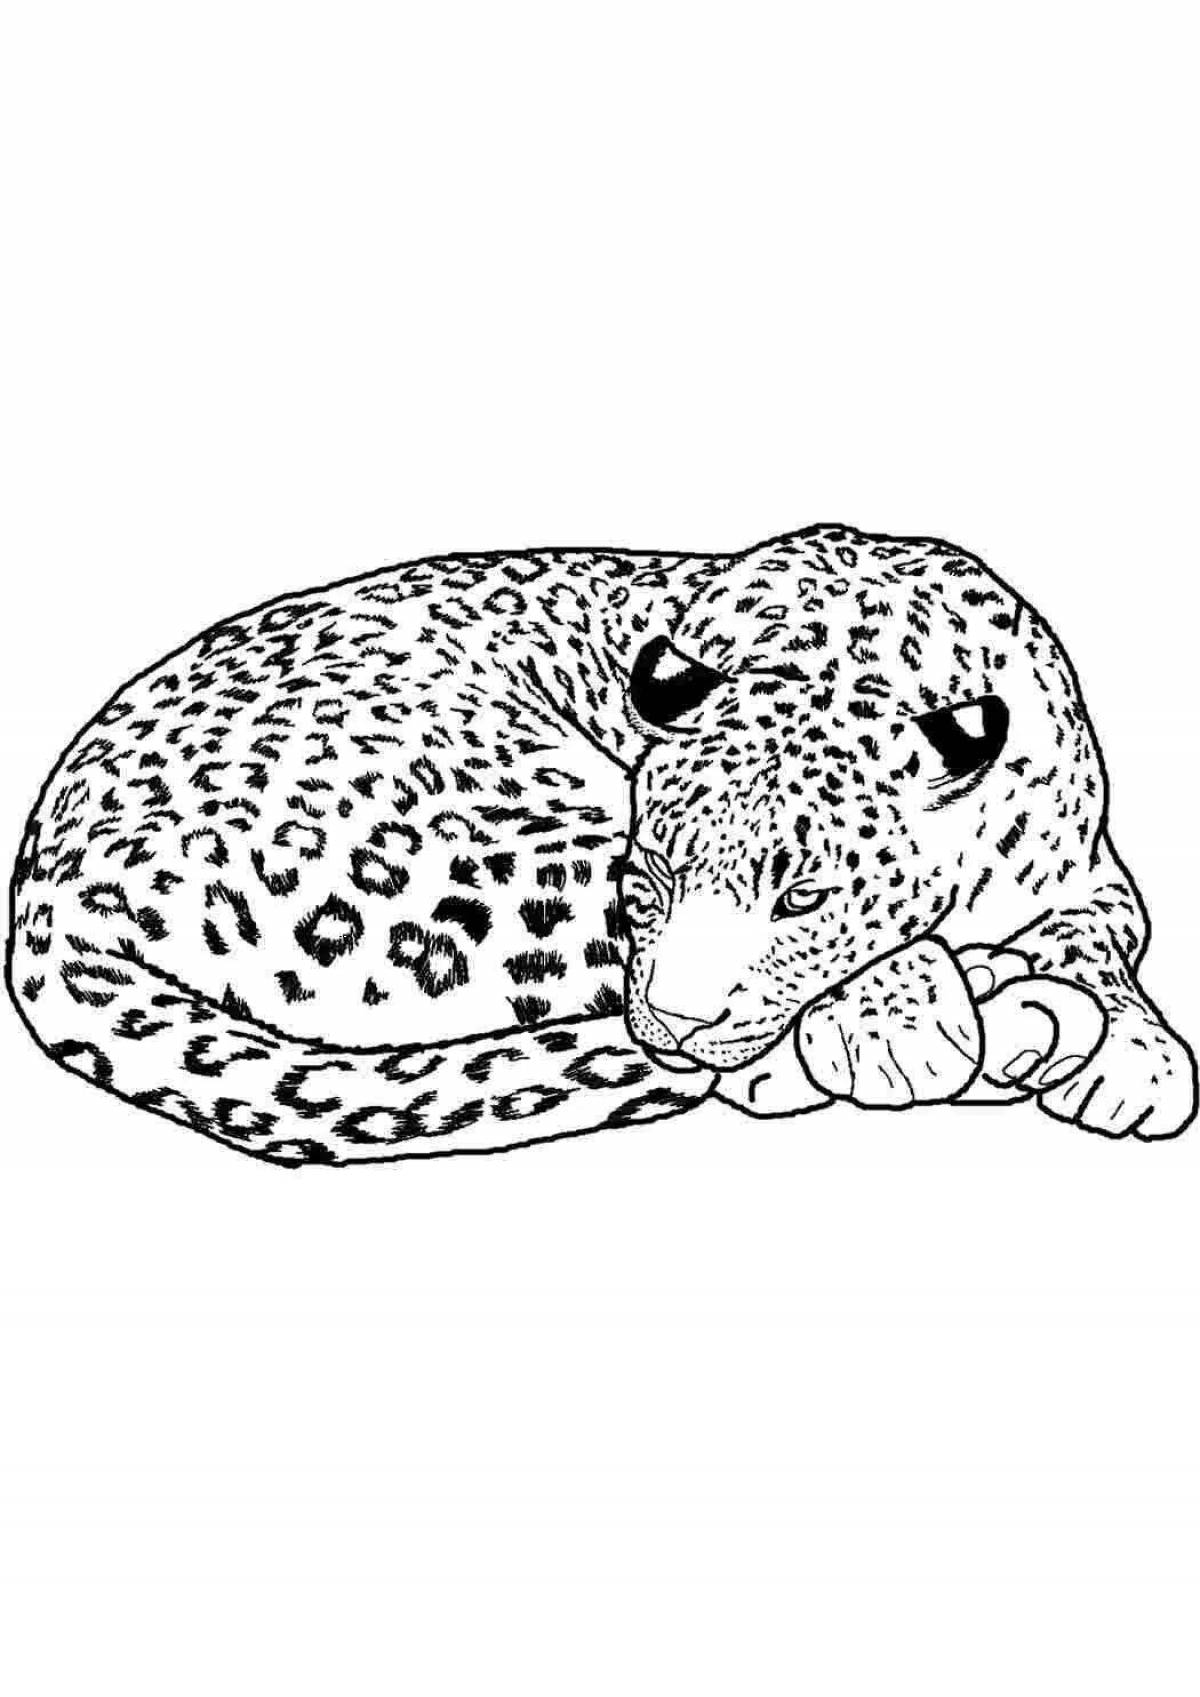 Замысловатая раскраска леопарда